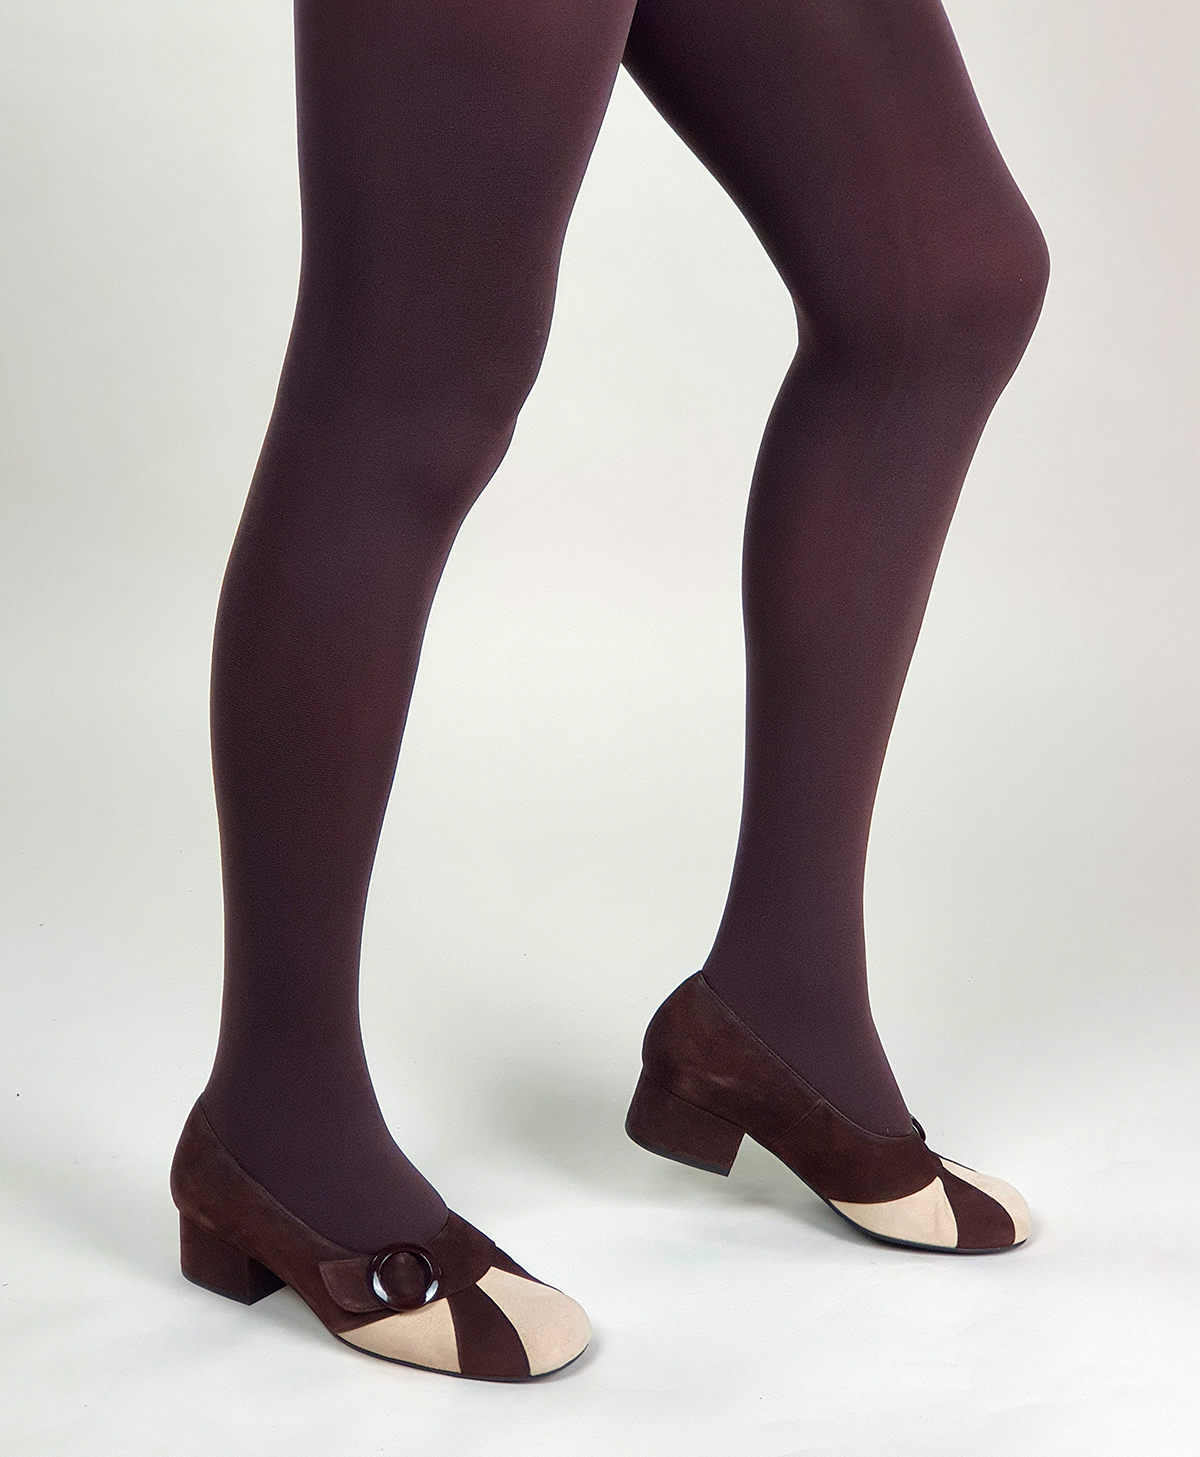 https://www.modshoes.co.uk/wp-content/uploads/2019/08/modshoes-rich-chocolate-100-denier-vintage-colour-style-ladies-tights-04.jpg